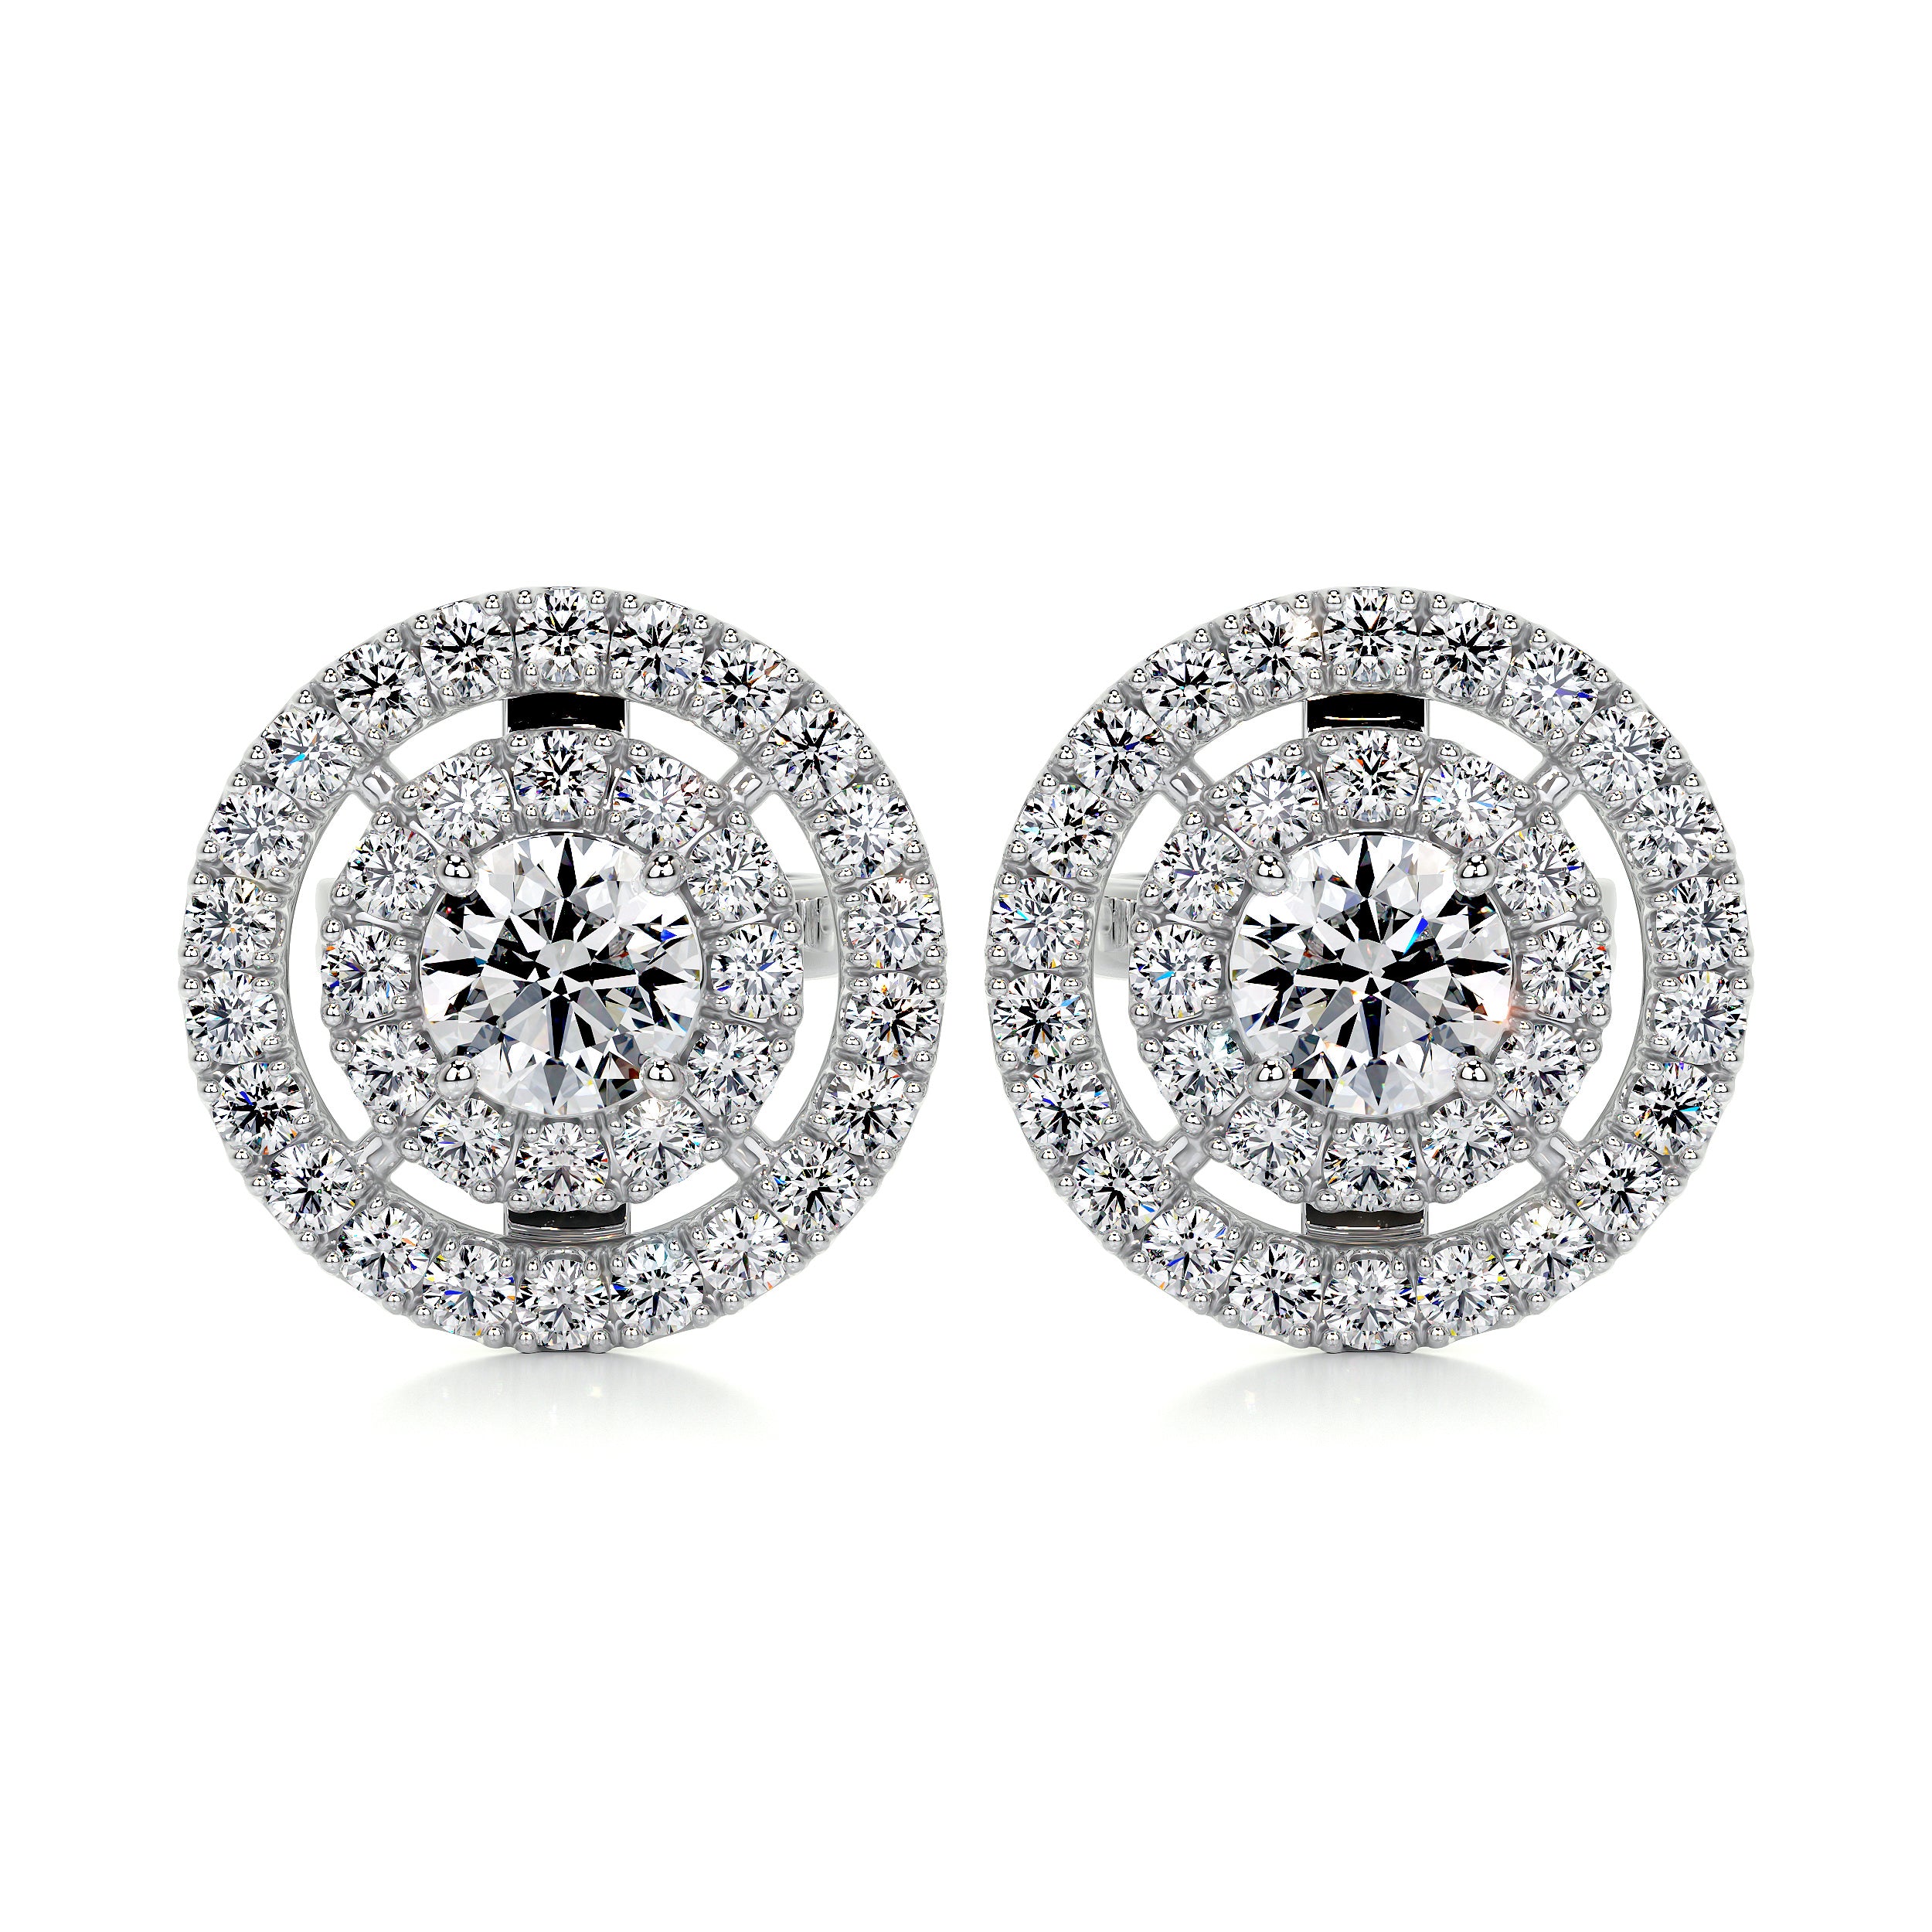 Joan Diamond Earrings   (1 Carat) - 18K White Gold